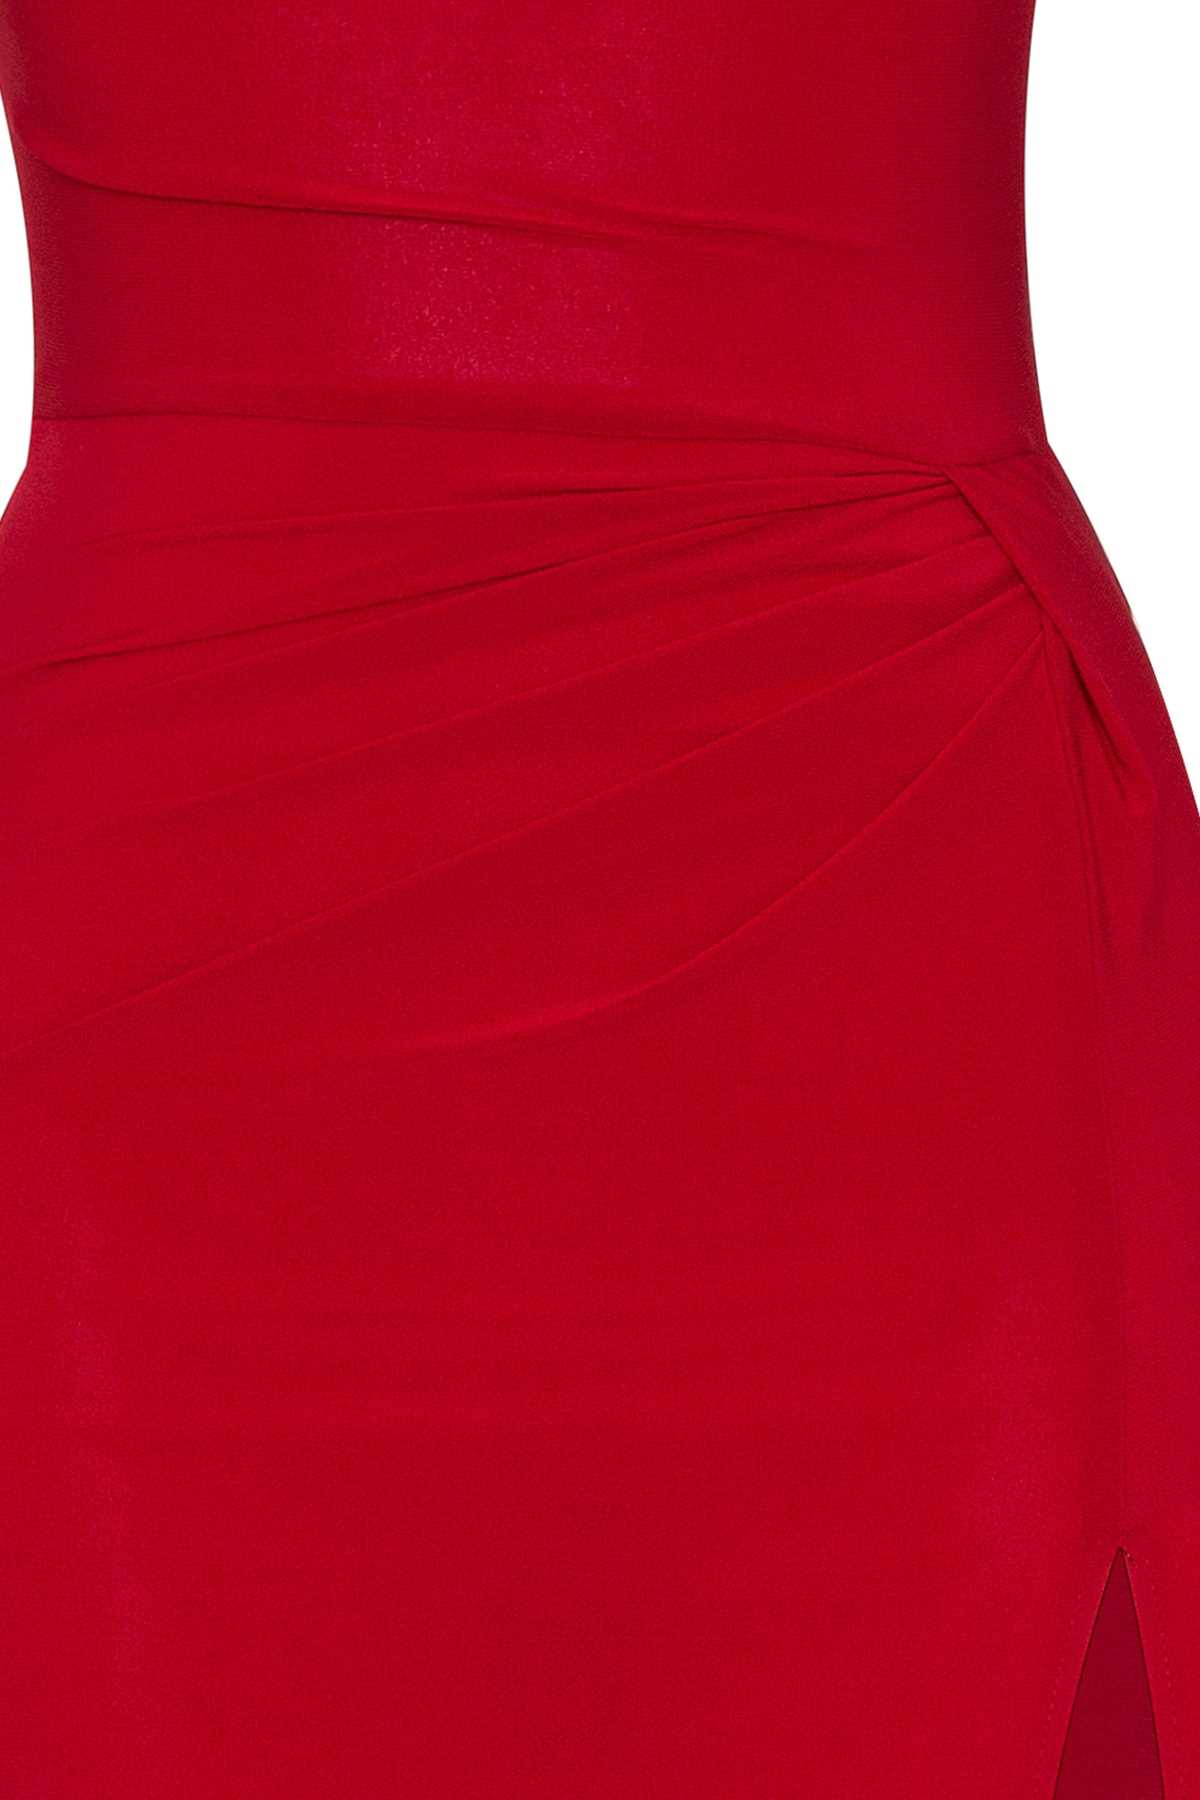 خرید نقدی لباس مجلسی زنانه ترک شیک Whenever Company رنگ قرمز ty120957103